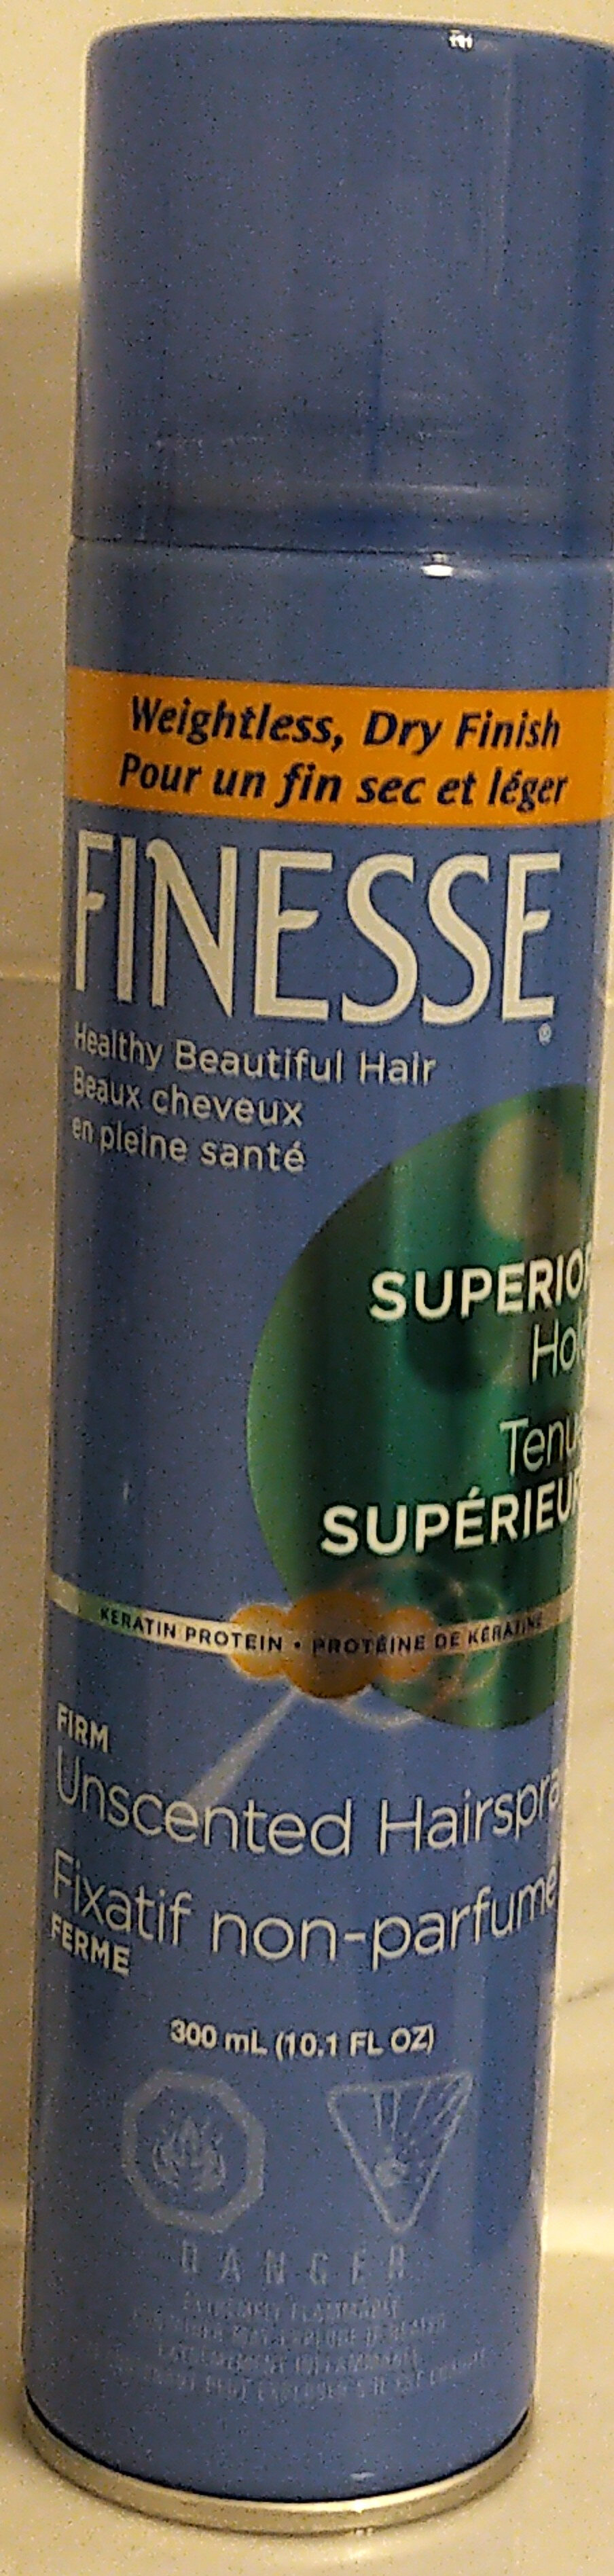 Firm Unscented Hairspray - Produit - en